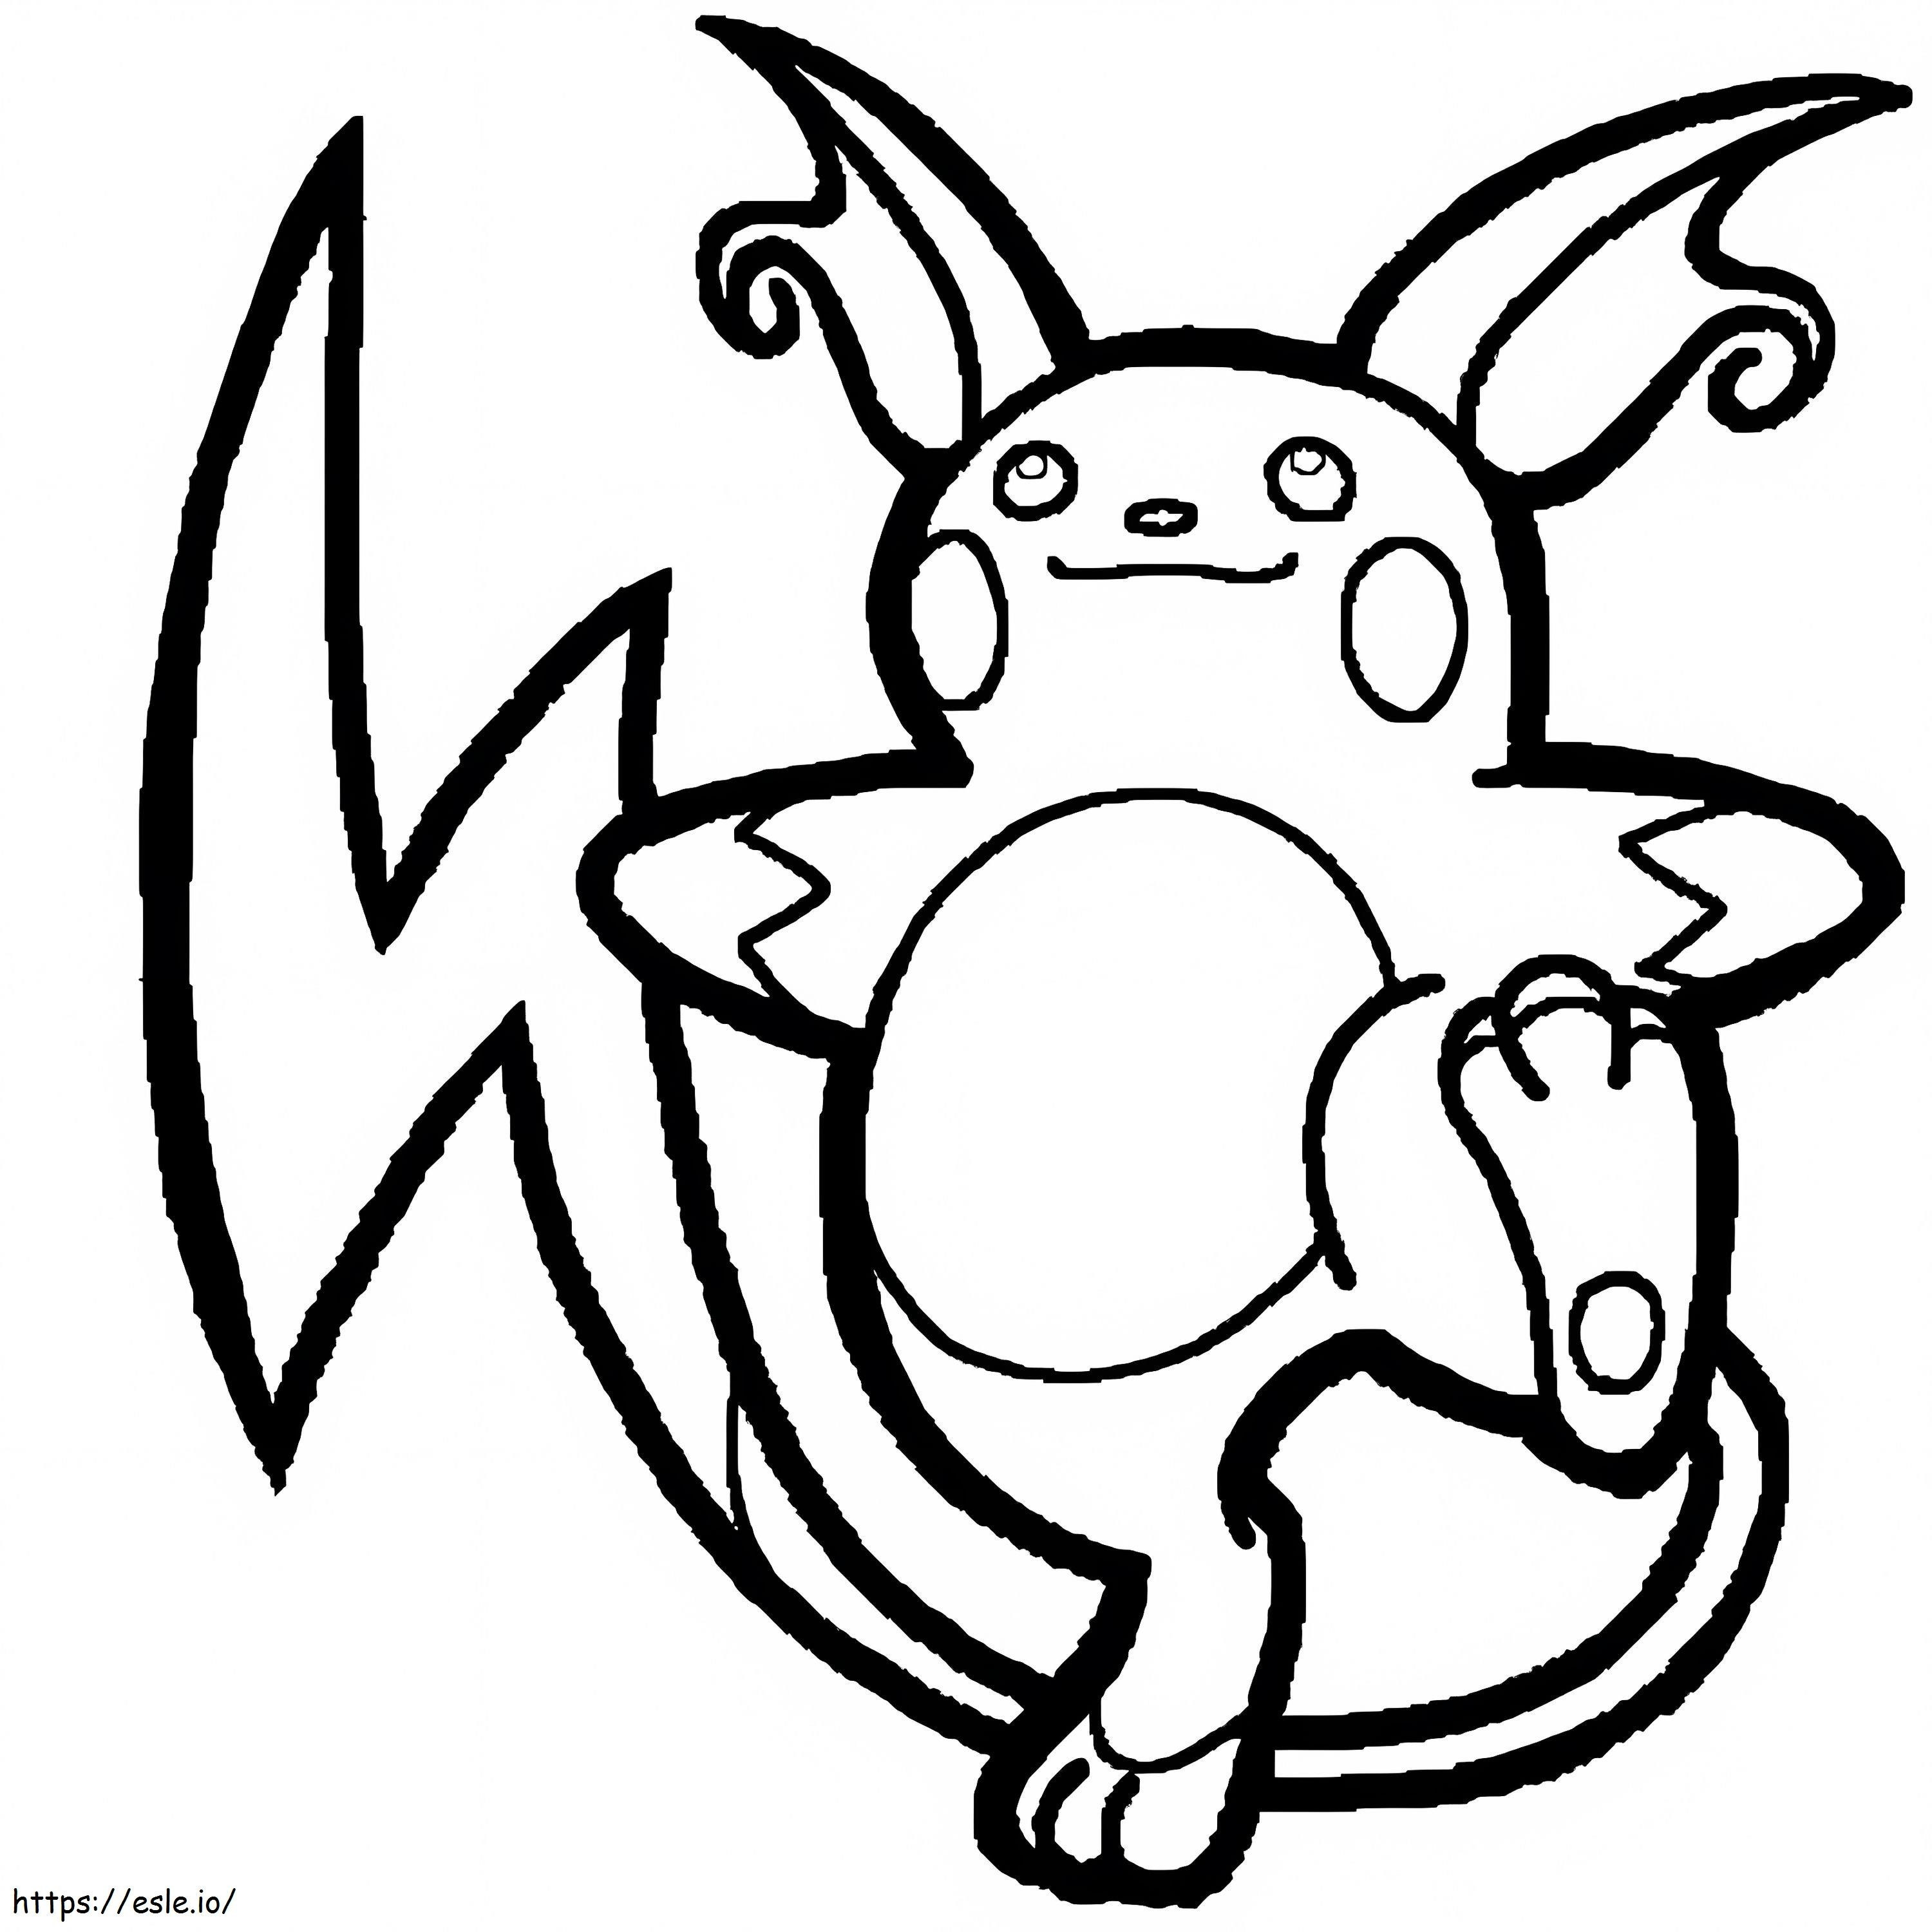 Pokemon Raichu 1 coloring page